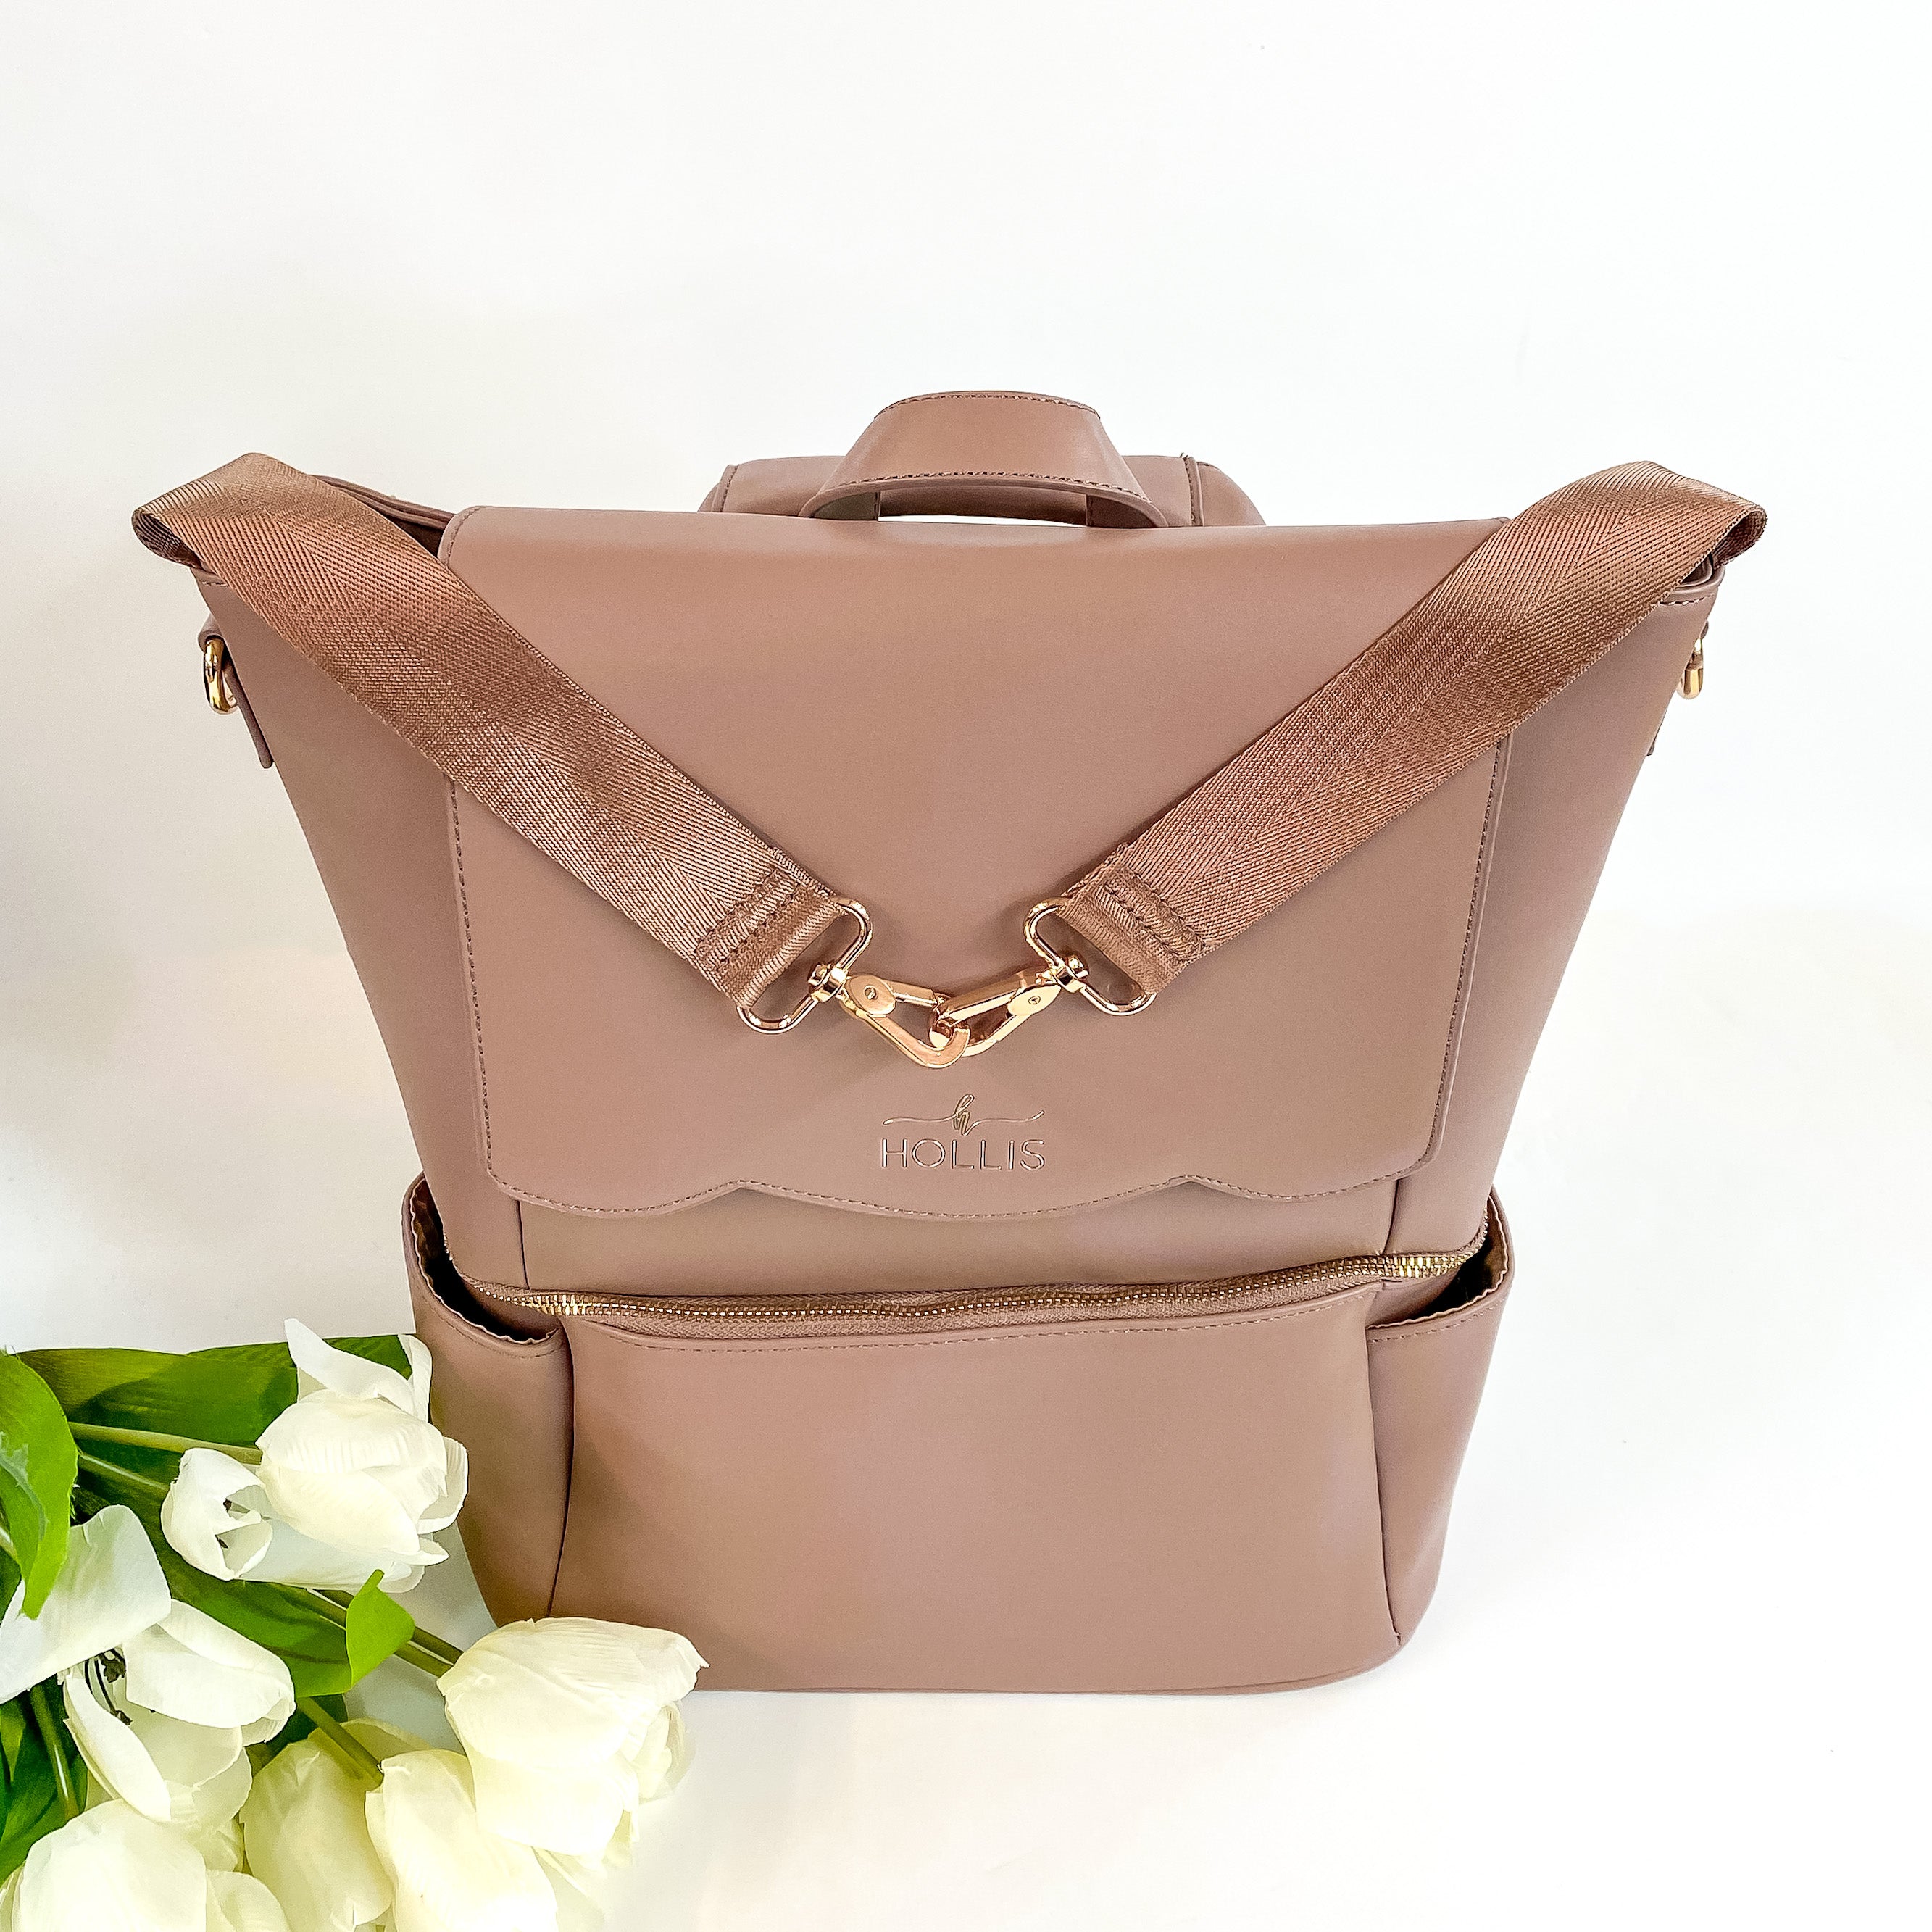 Hollis | Diaper Bag in Mocha - Giddy Up Glamour Boutique